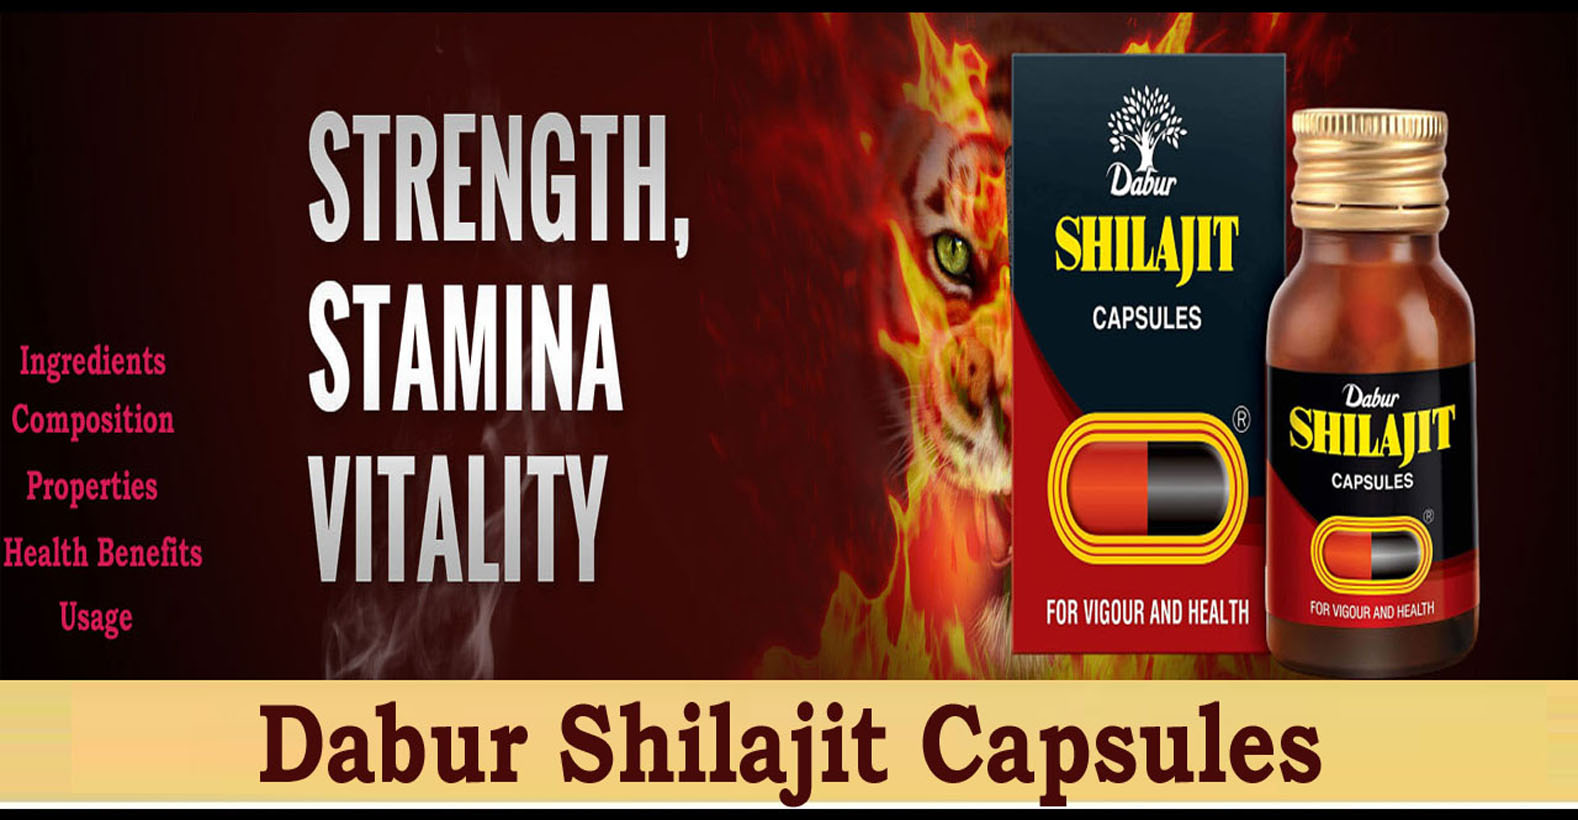 Dabur Shilajit Capsule - Ingredients, Composition, Properties, Benefits ,Usage